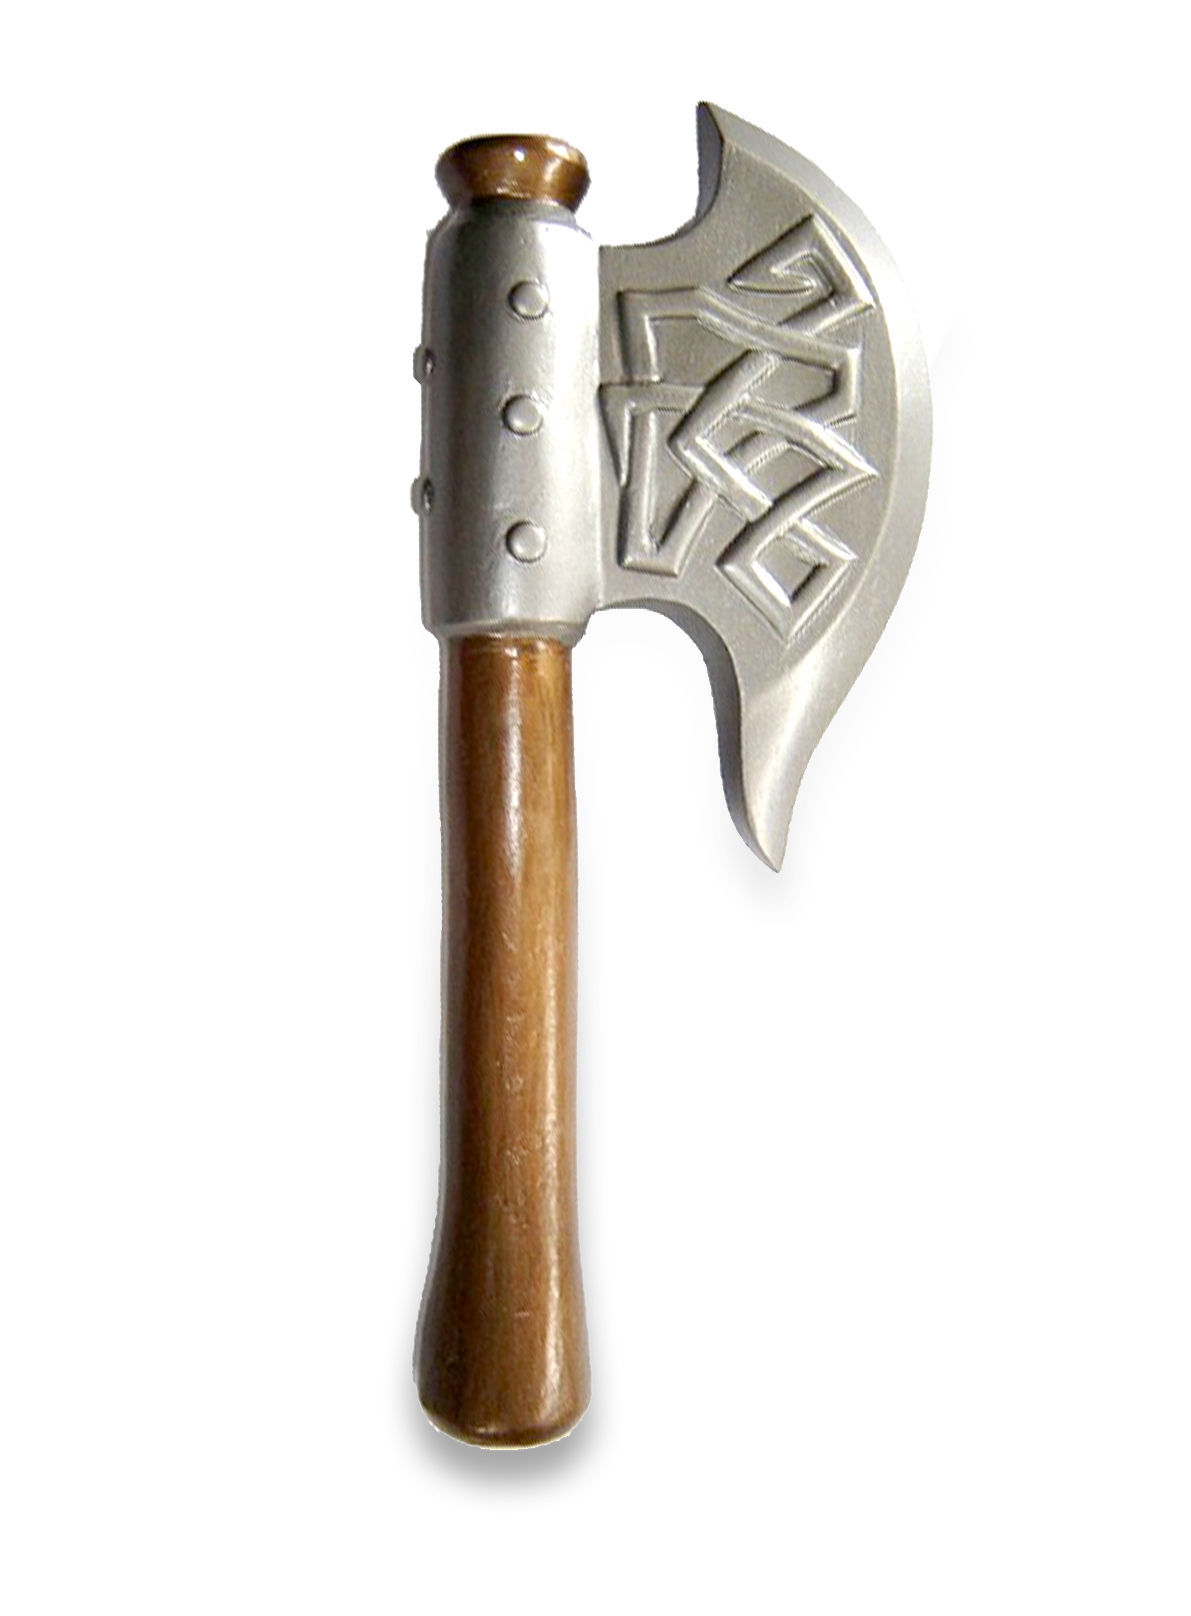 Objets perdus/trouvés pendant le GN 2013 - Page 2 103627-wikinger-wurfaxt-polsterwaffe-viking-throwing-axe-foam-weapon?$bigview$